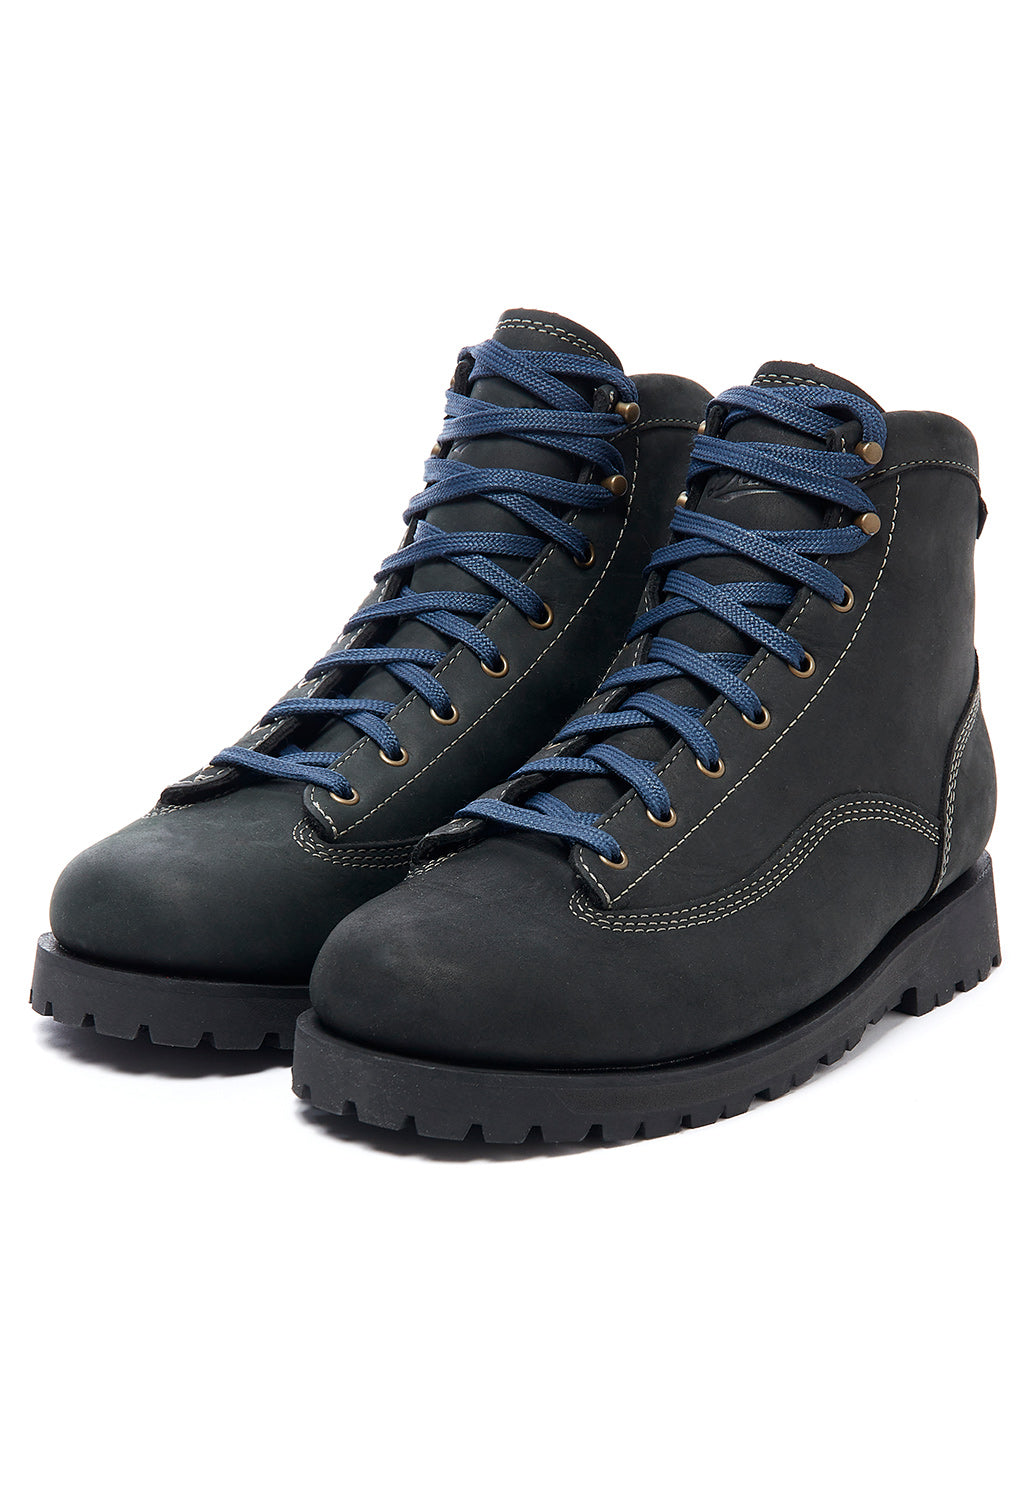 Danner Men's Cedar Grove Boots - Black GTX